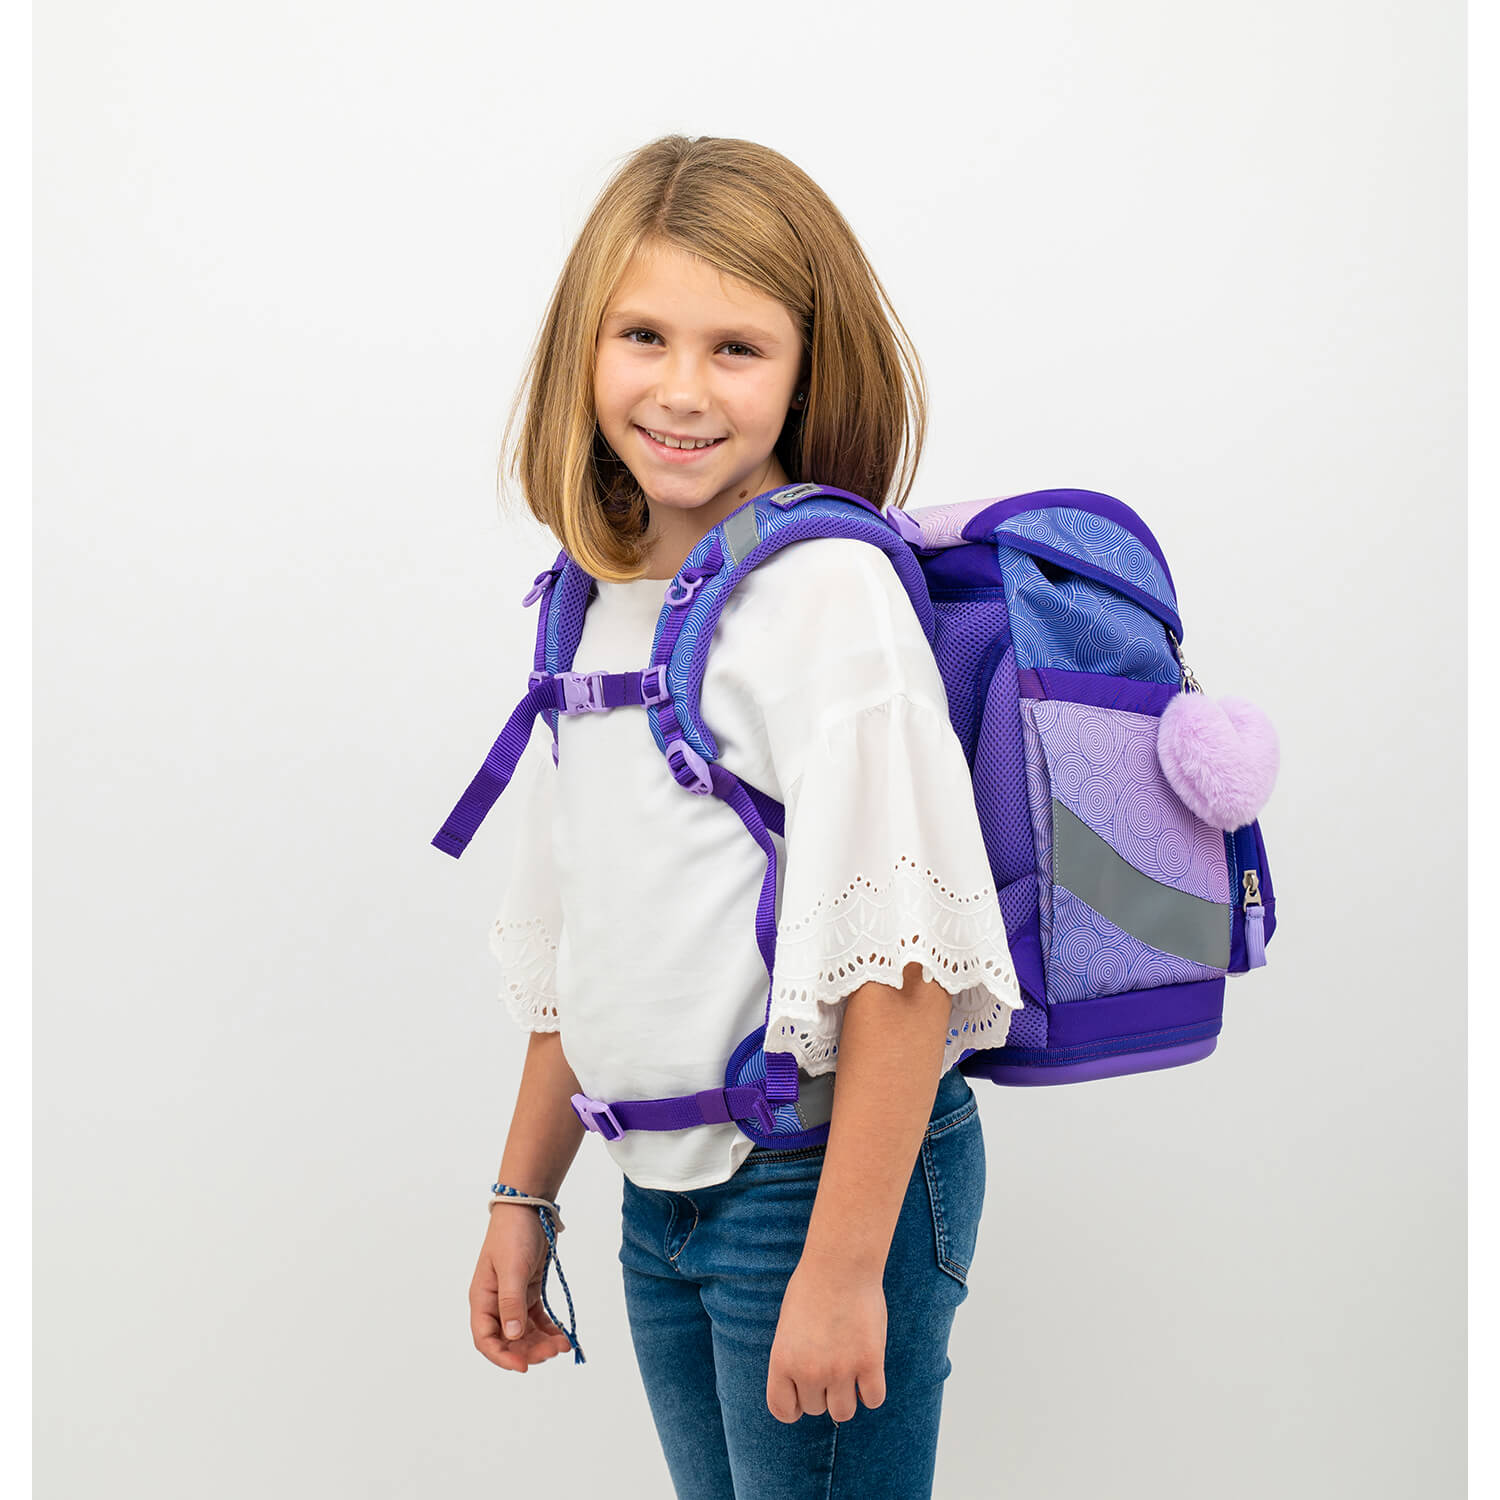 Smarty Wonder 2 schoolbag set 6 pcs with GRATIS keychain